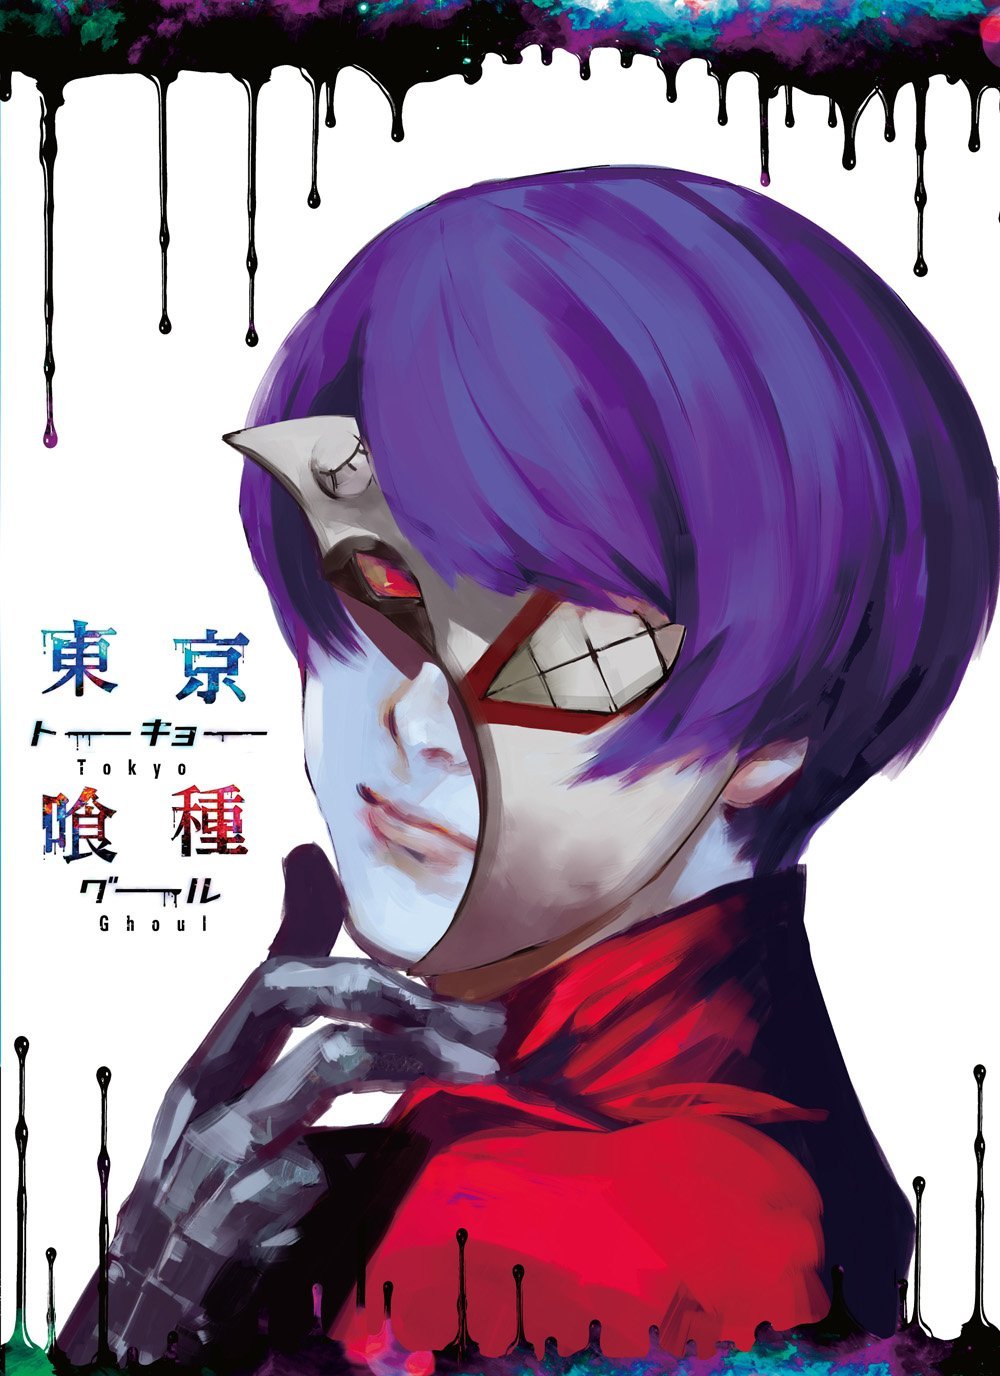 Tokyo Ghoul Temporada 2 - DVD - Sui Ishida